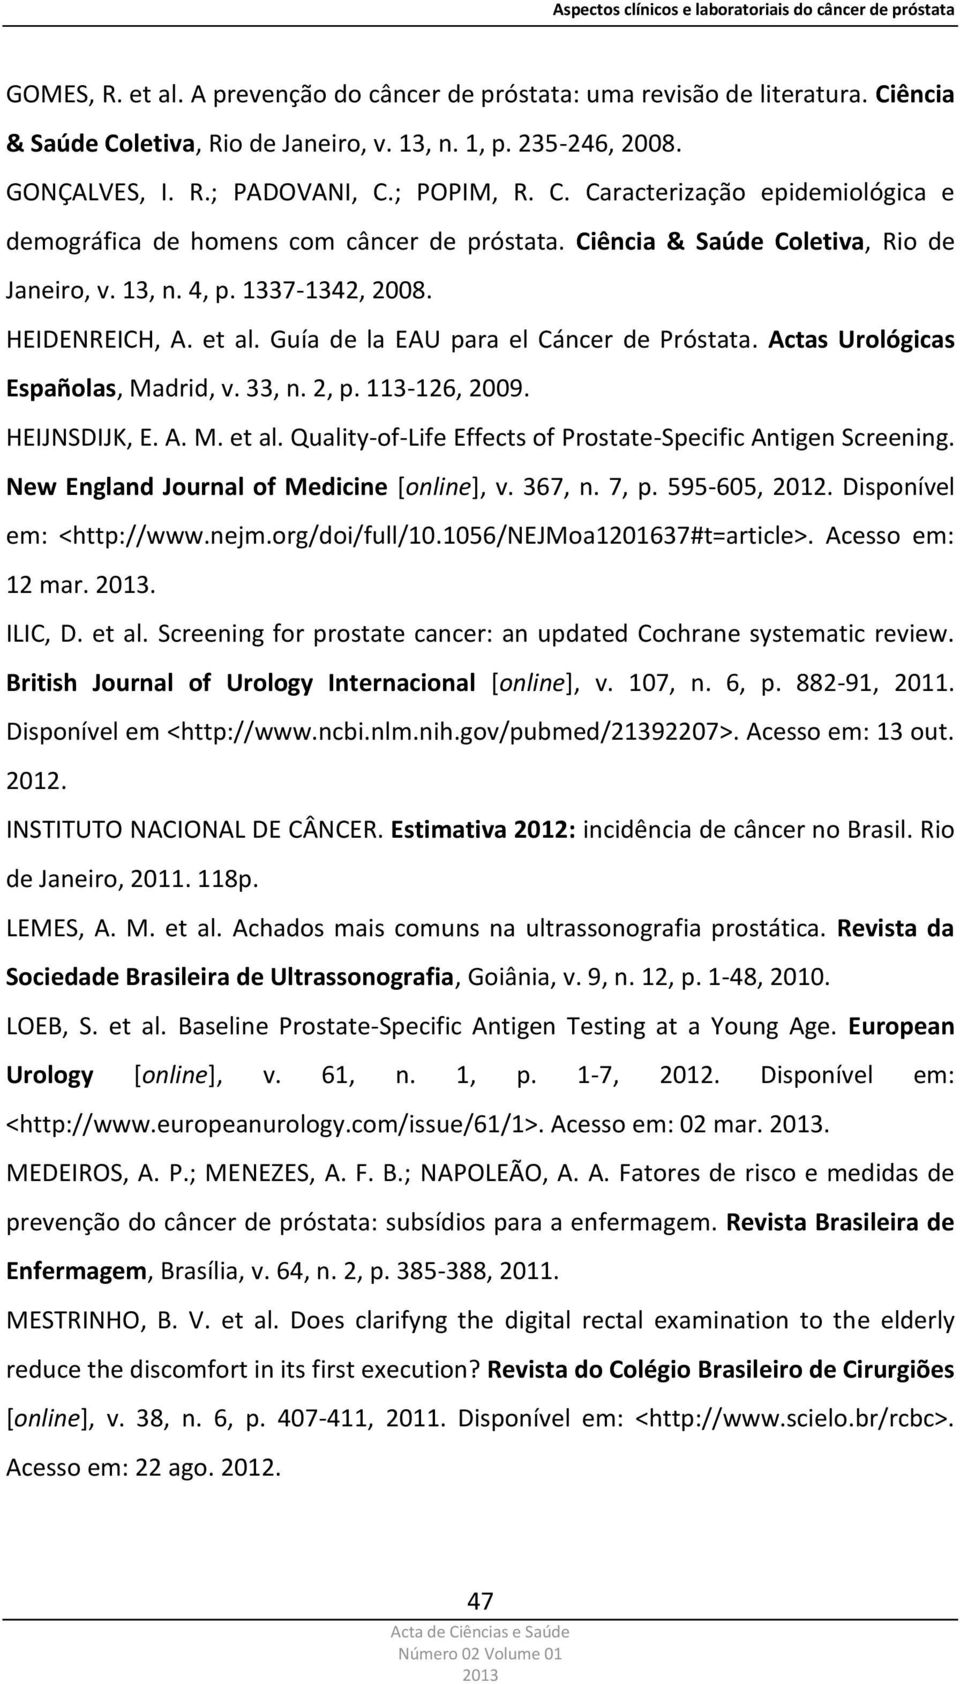 113-126, 2009. HEIJNSDIJK, E. A. M. et al. Quality-of-Life Effects of Prostate-Specific Antigen Screening. New England Journal of Medicine [online], v. 367, n. 7, p. 595-605, 2012.